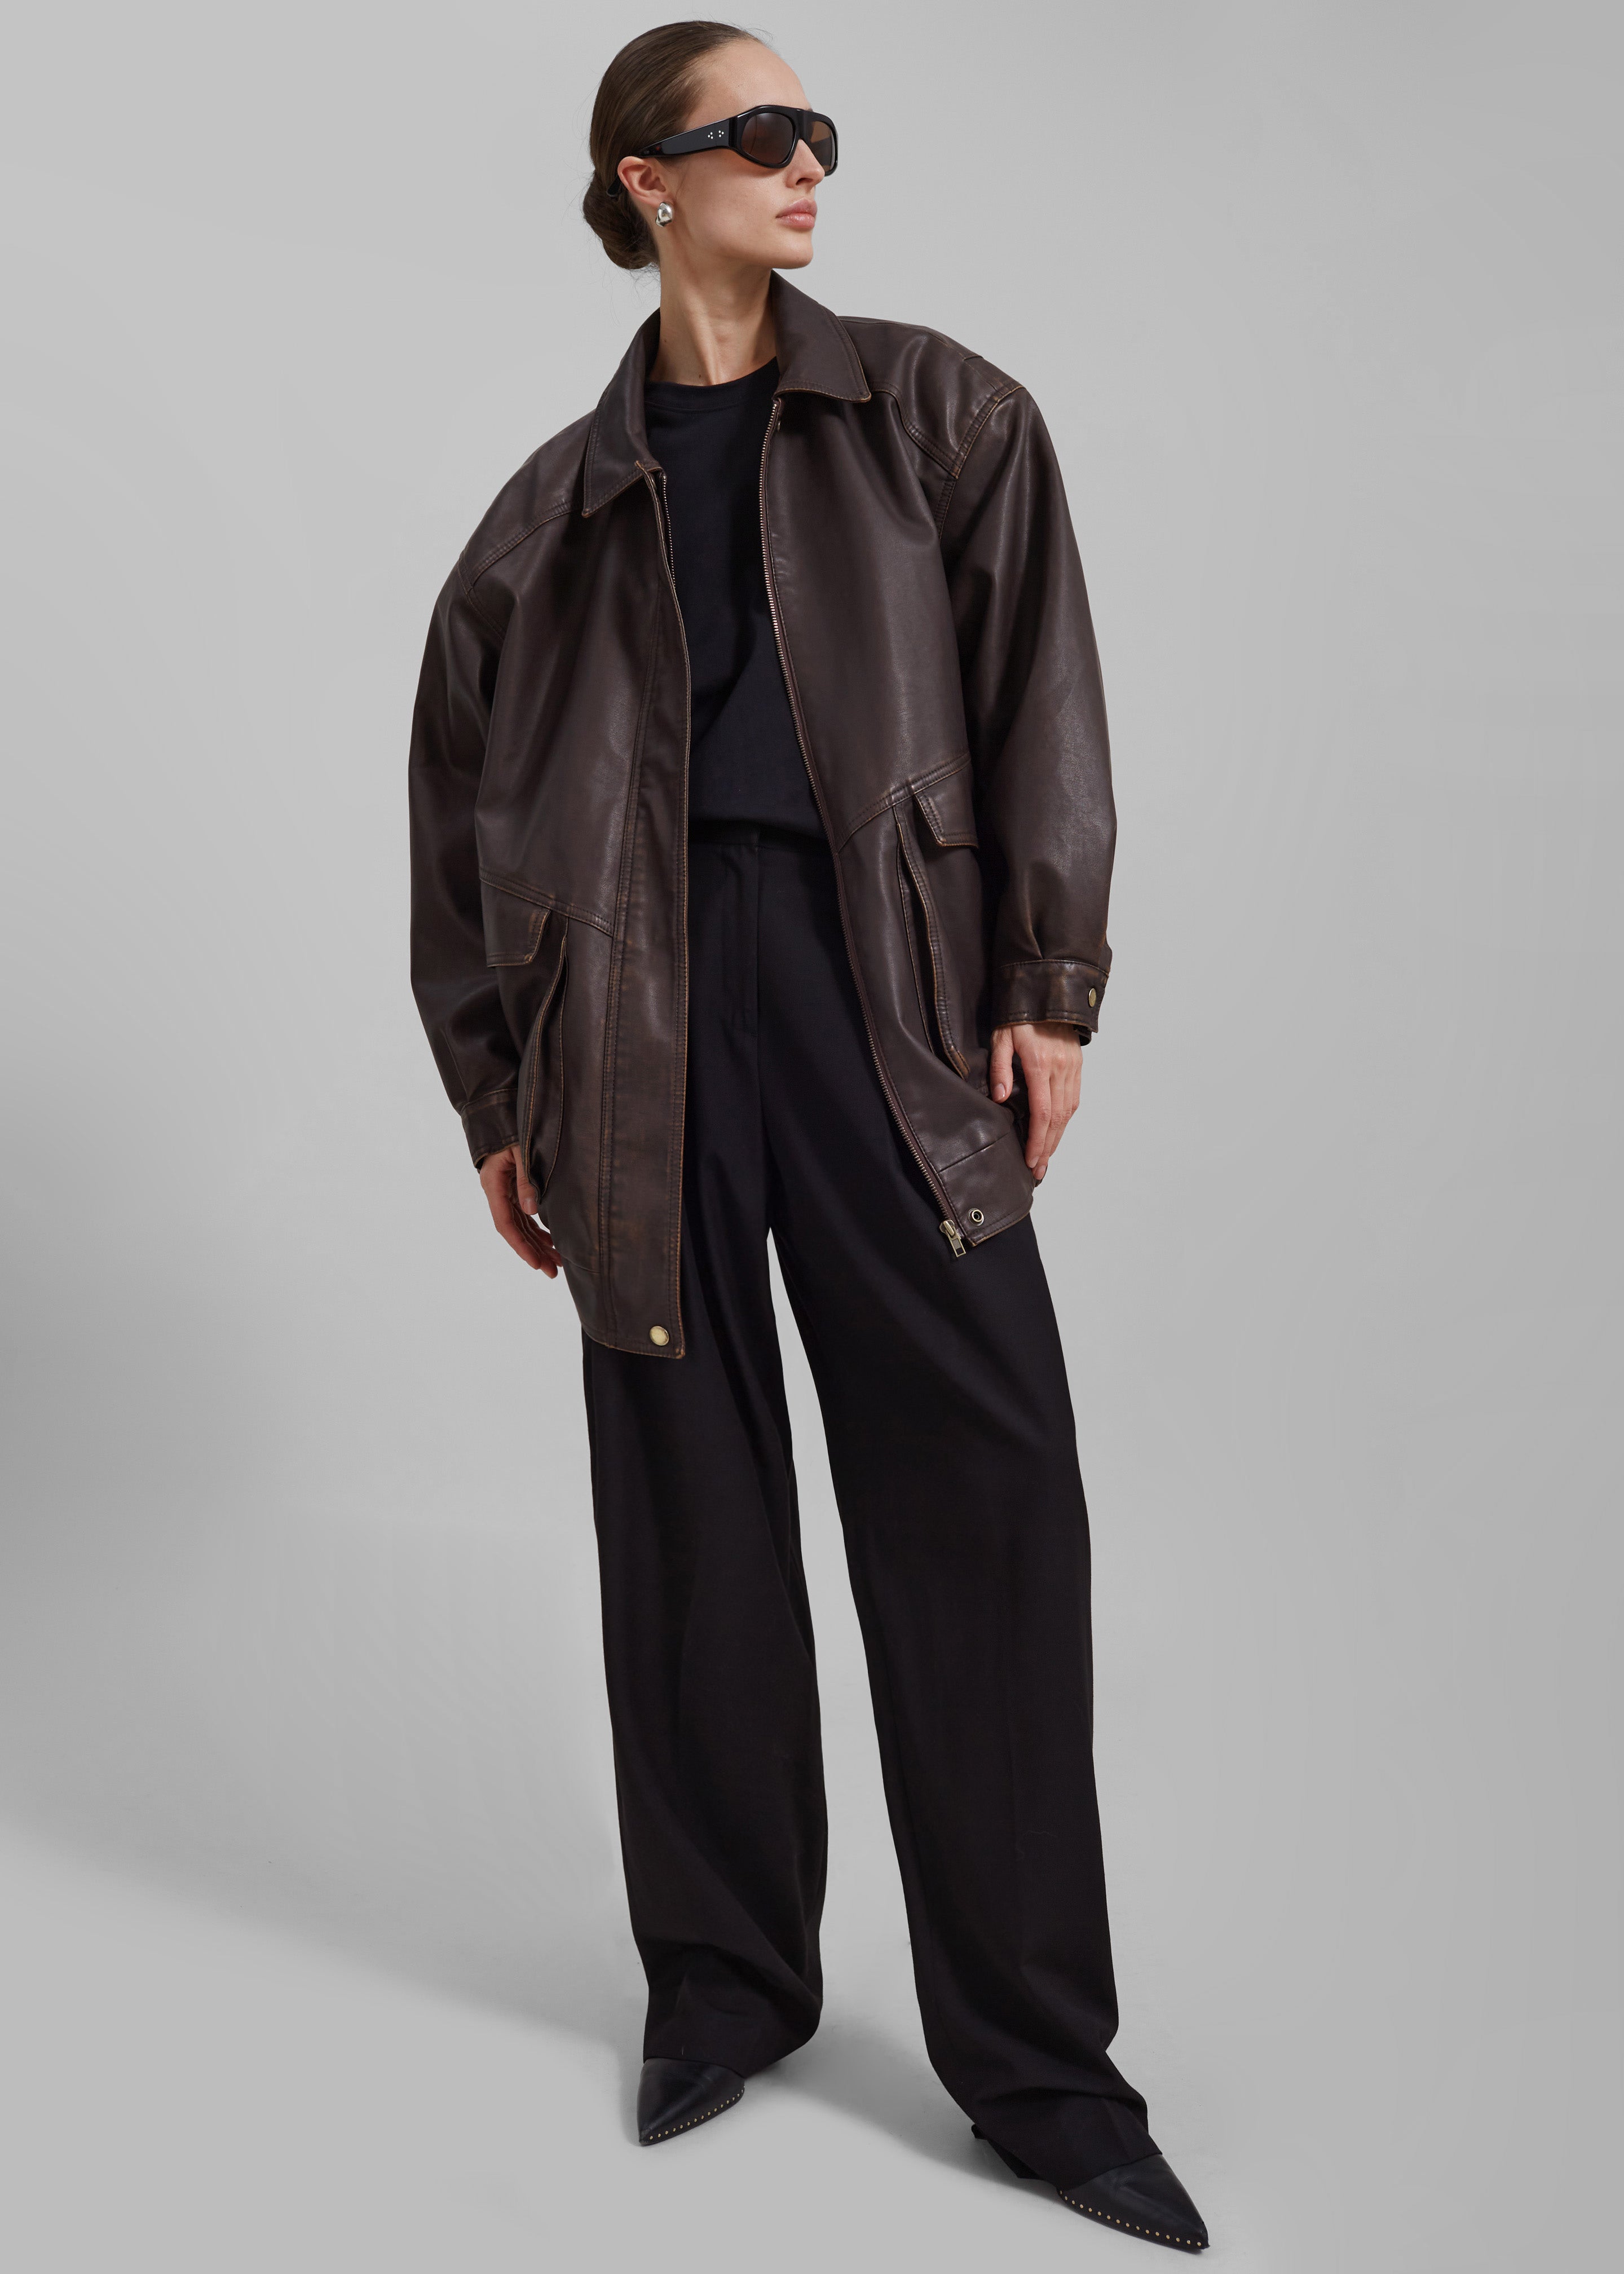 Women's Coats, Jackets, Trench & Blazer – Frankie Shop Europe